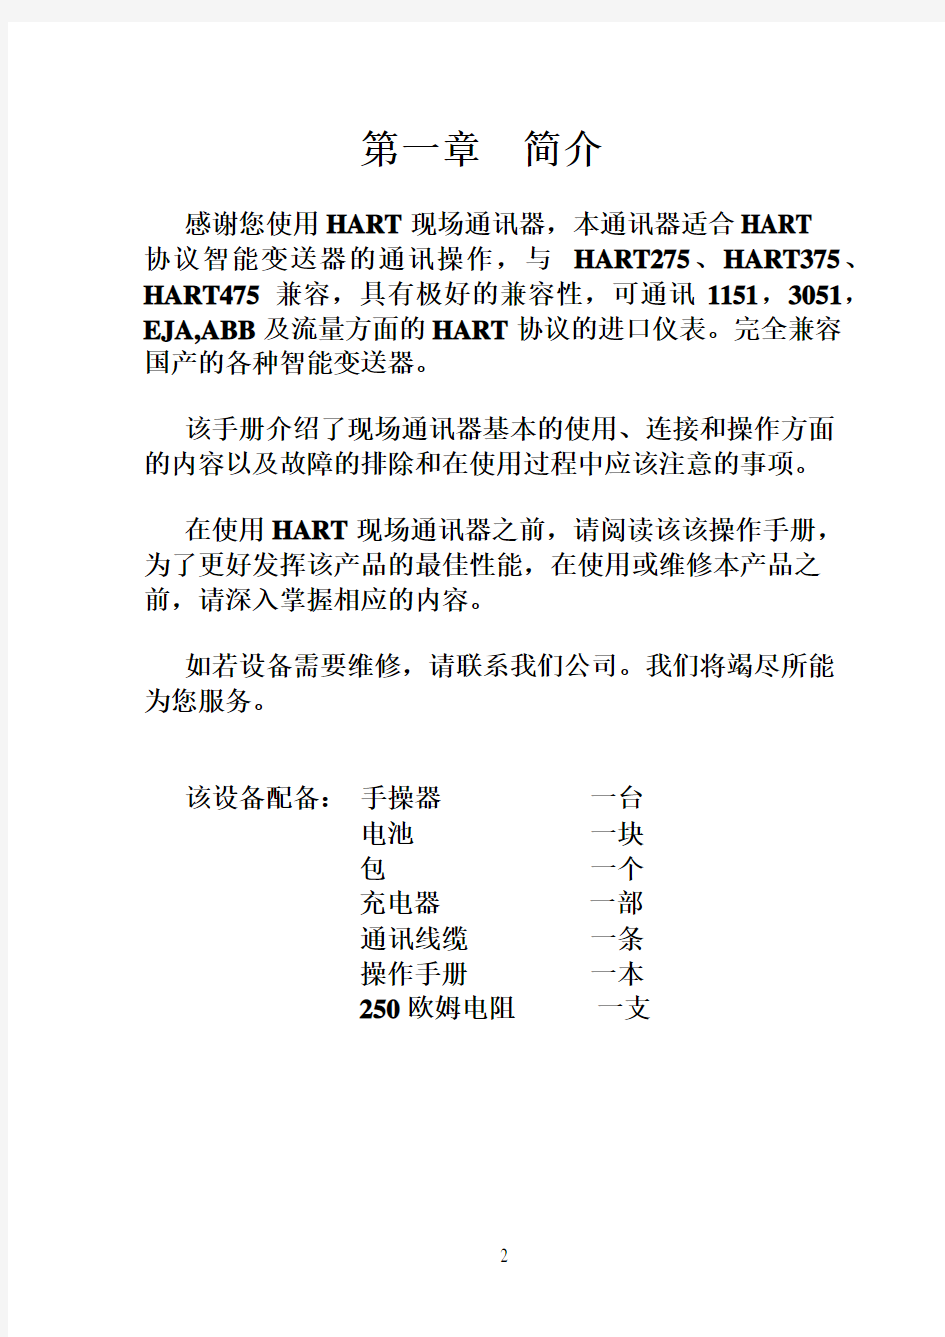 HART475国产手操器中文说明书